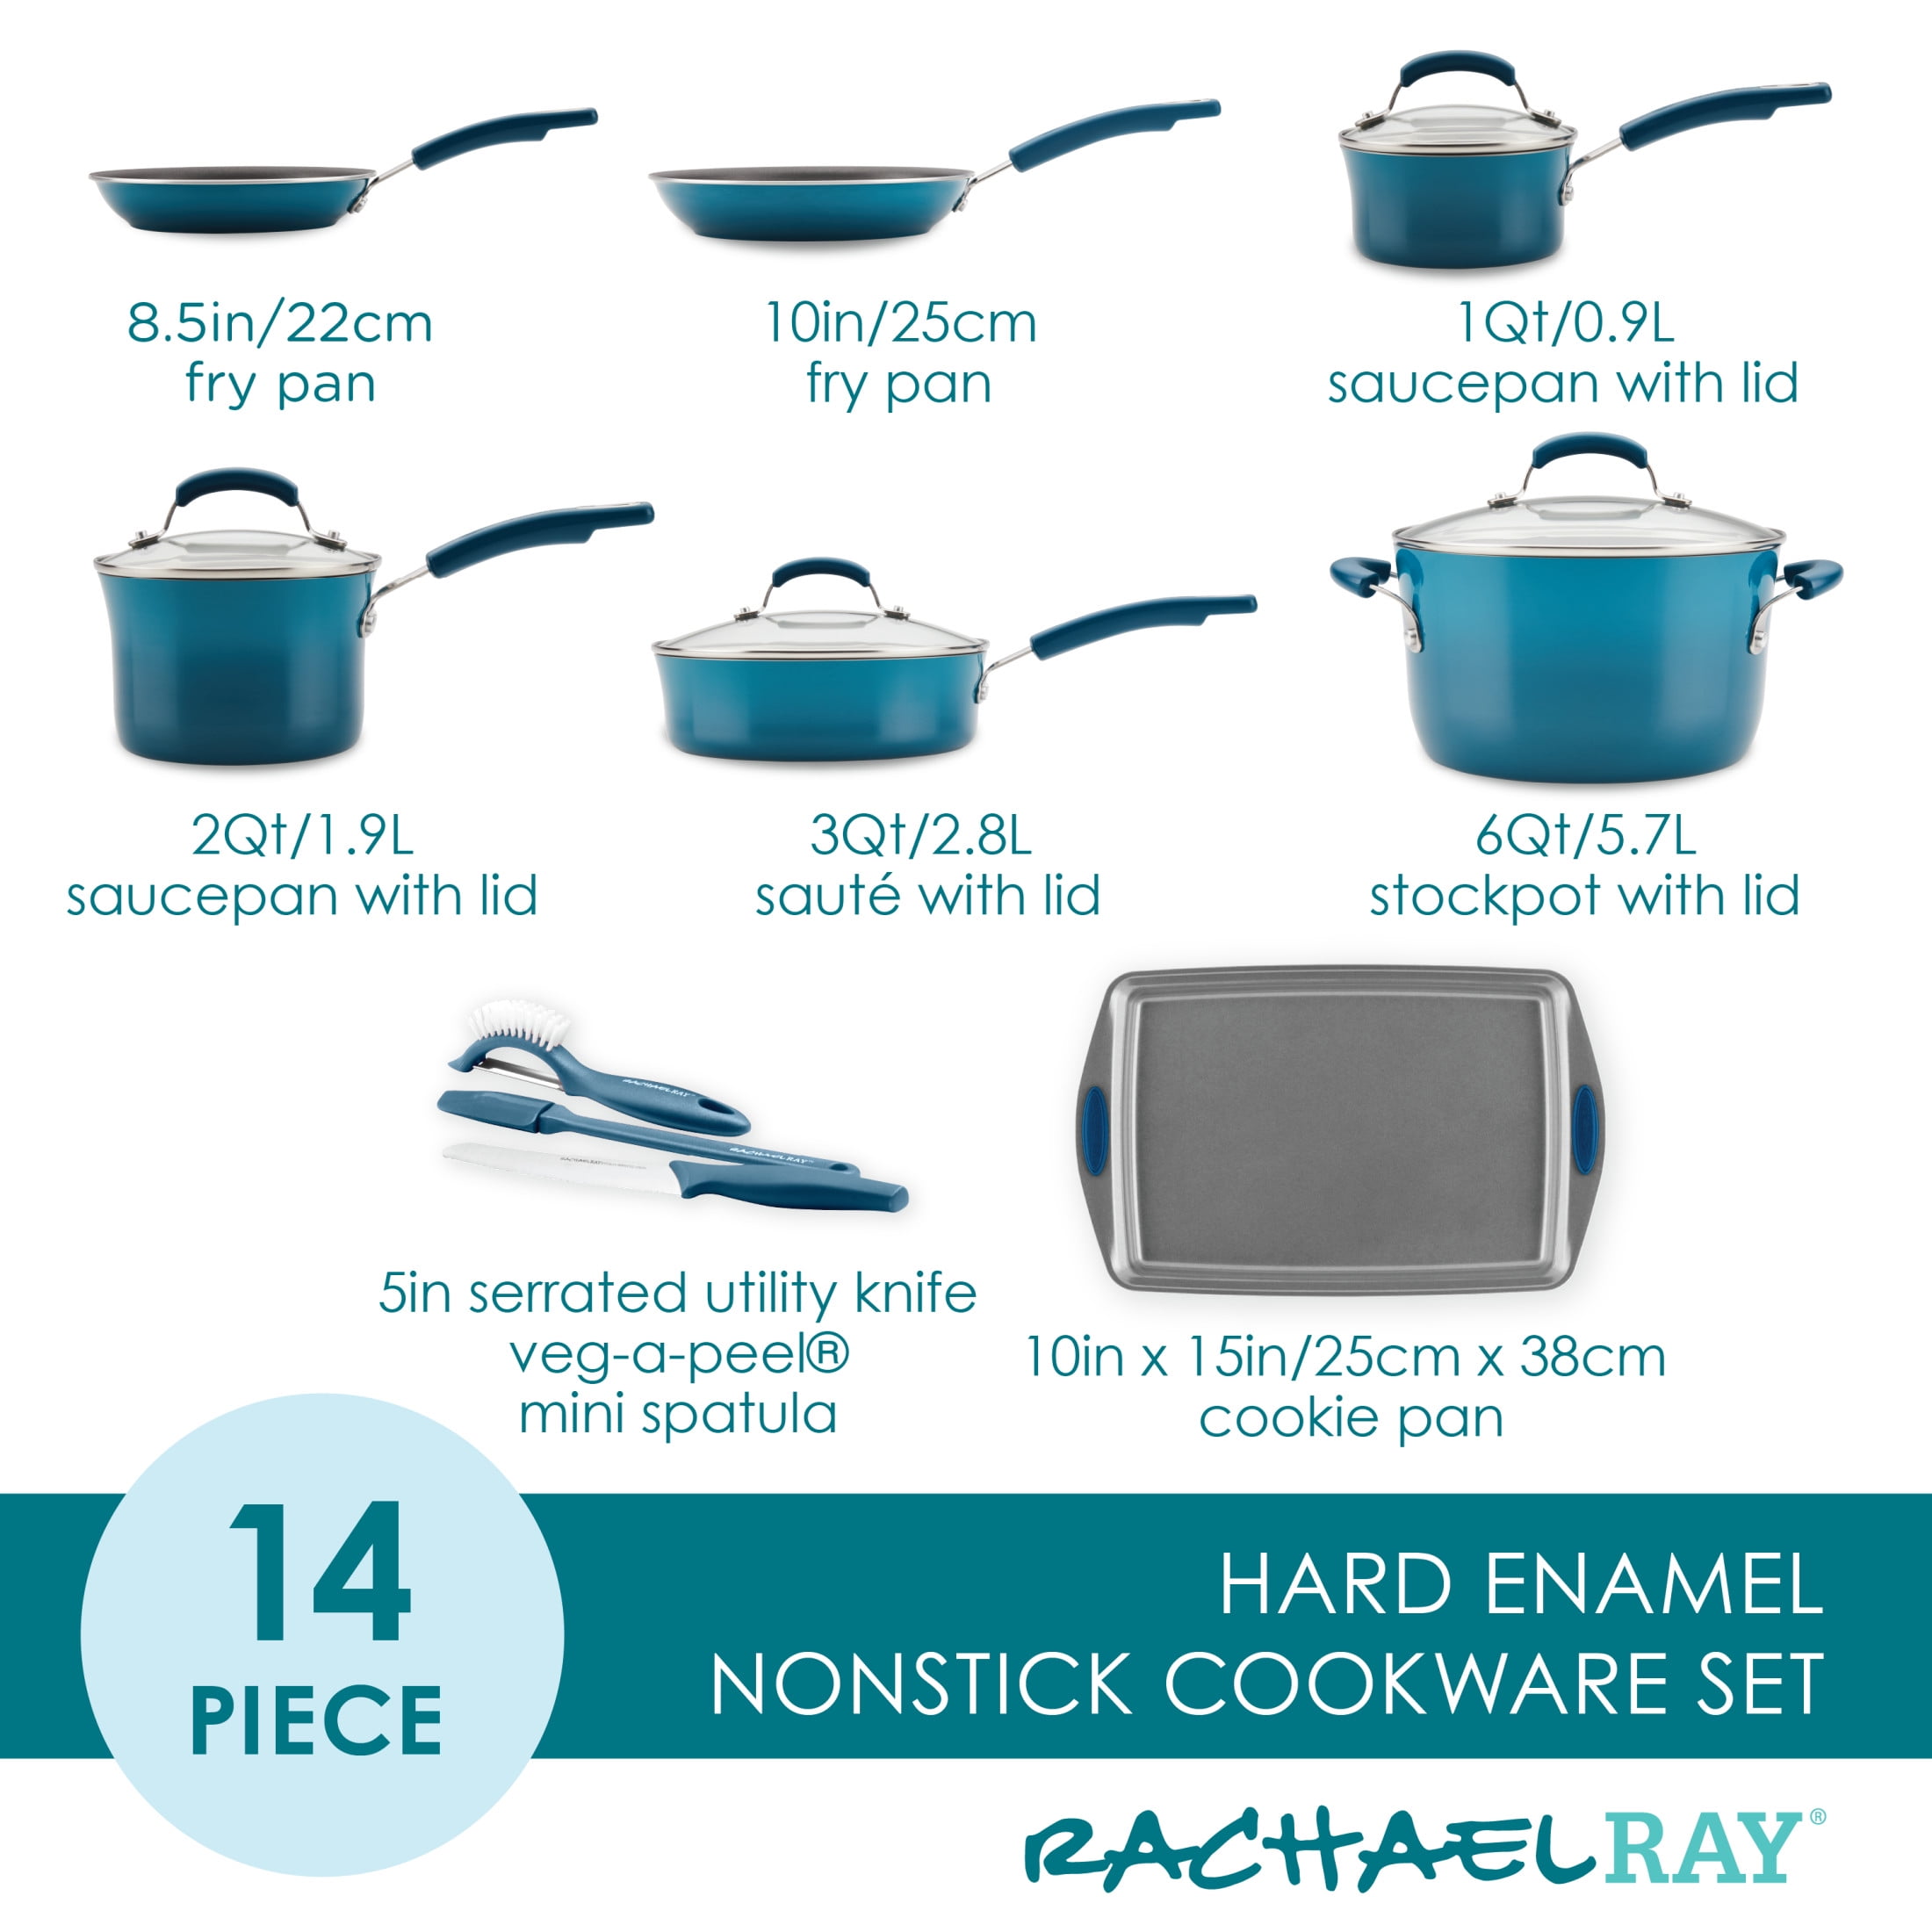 Rachael Ray 14-Piece Cookware Set Marine Blue 17629 - Best Buy